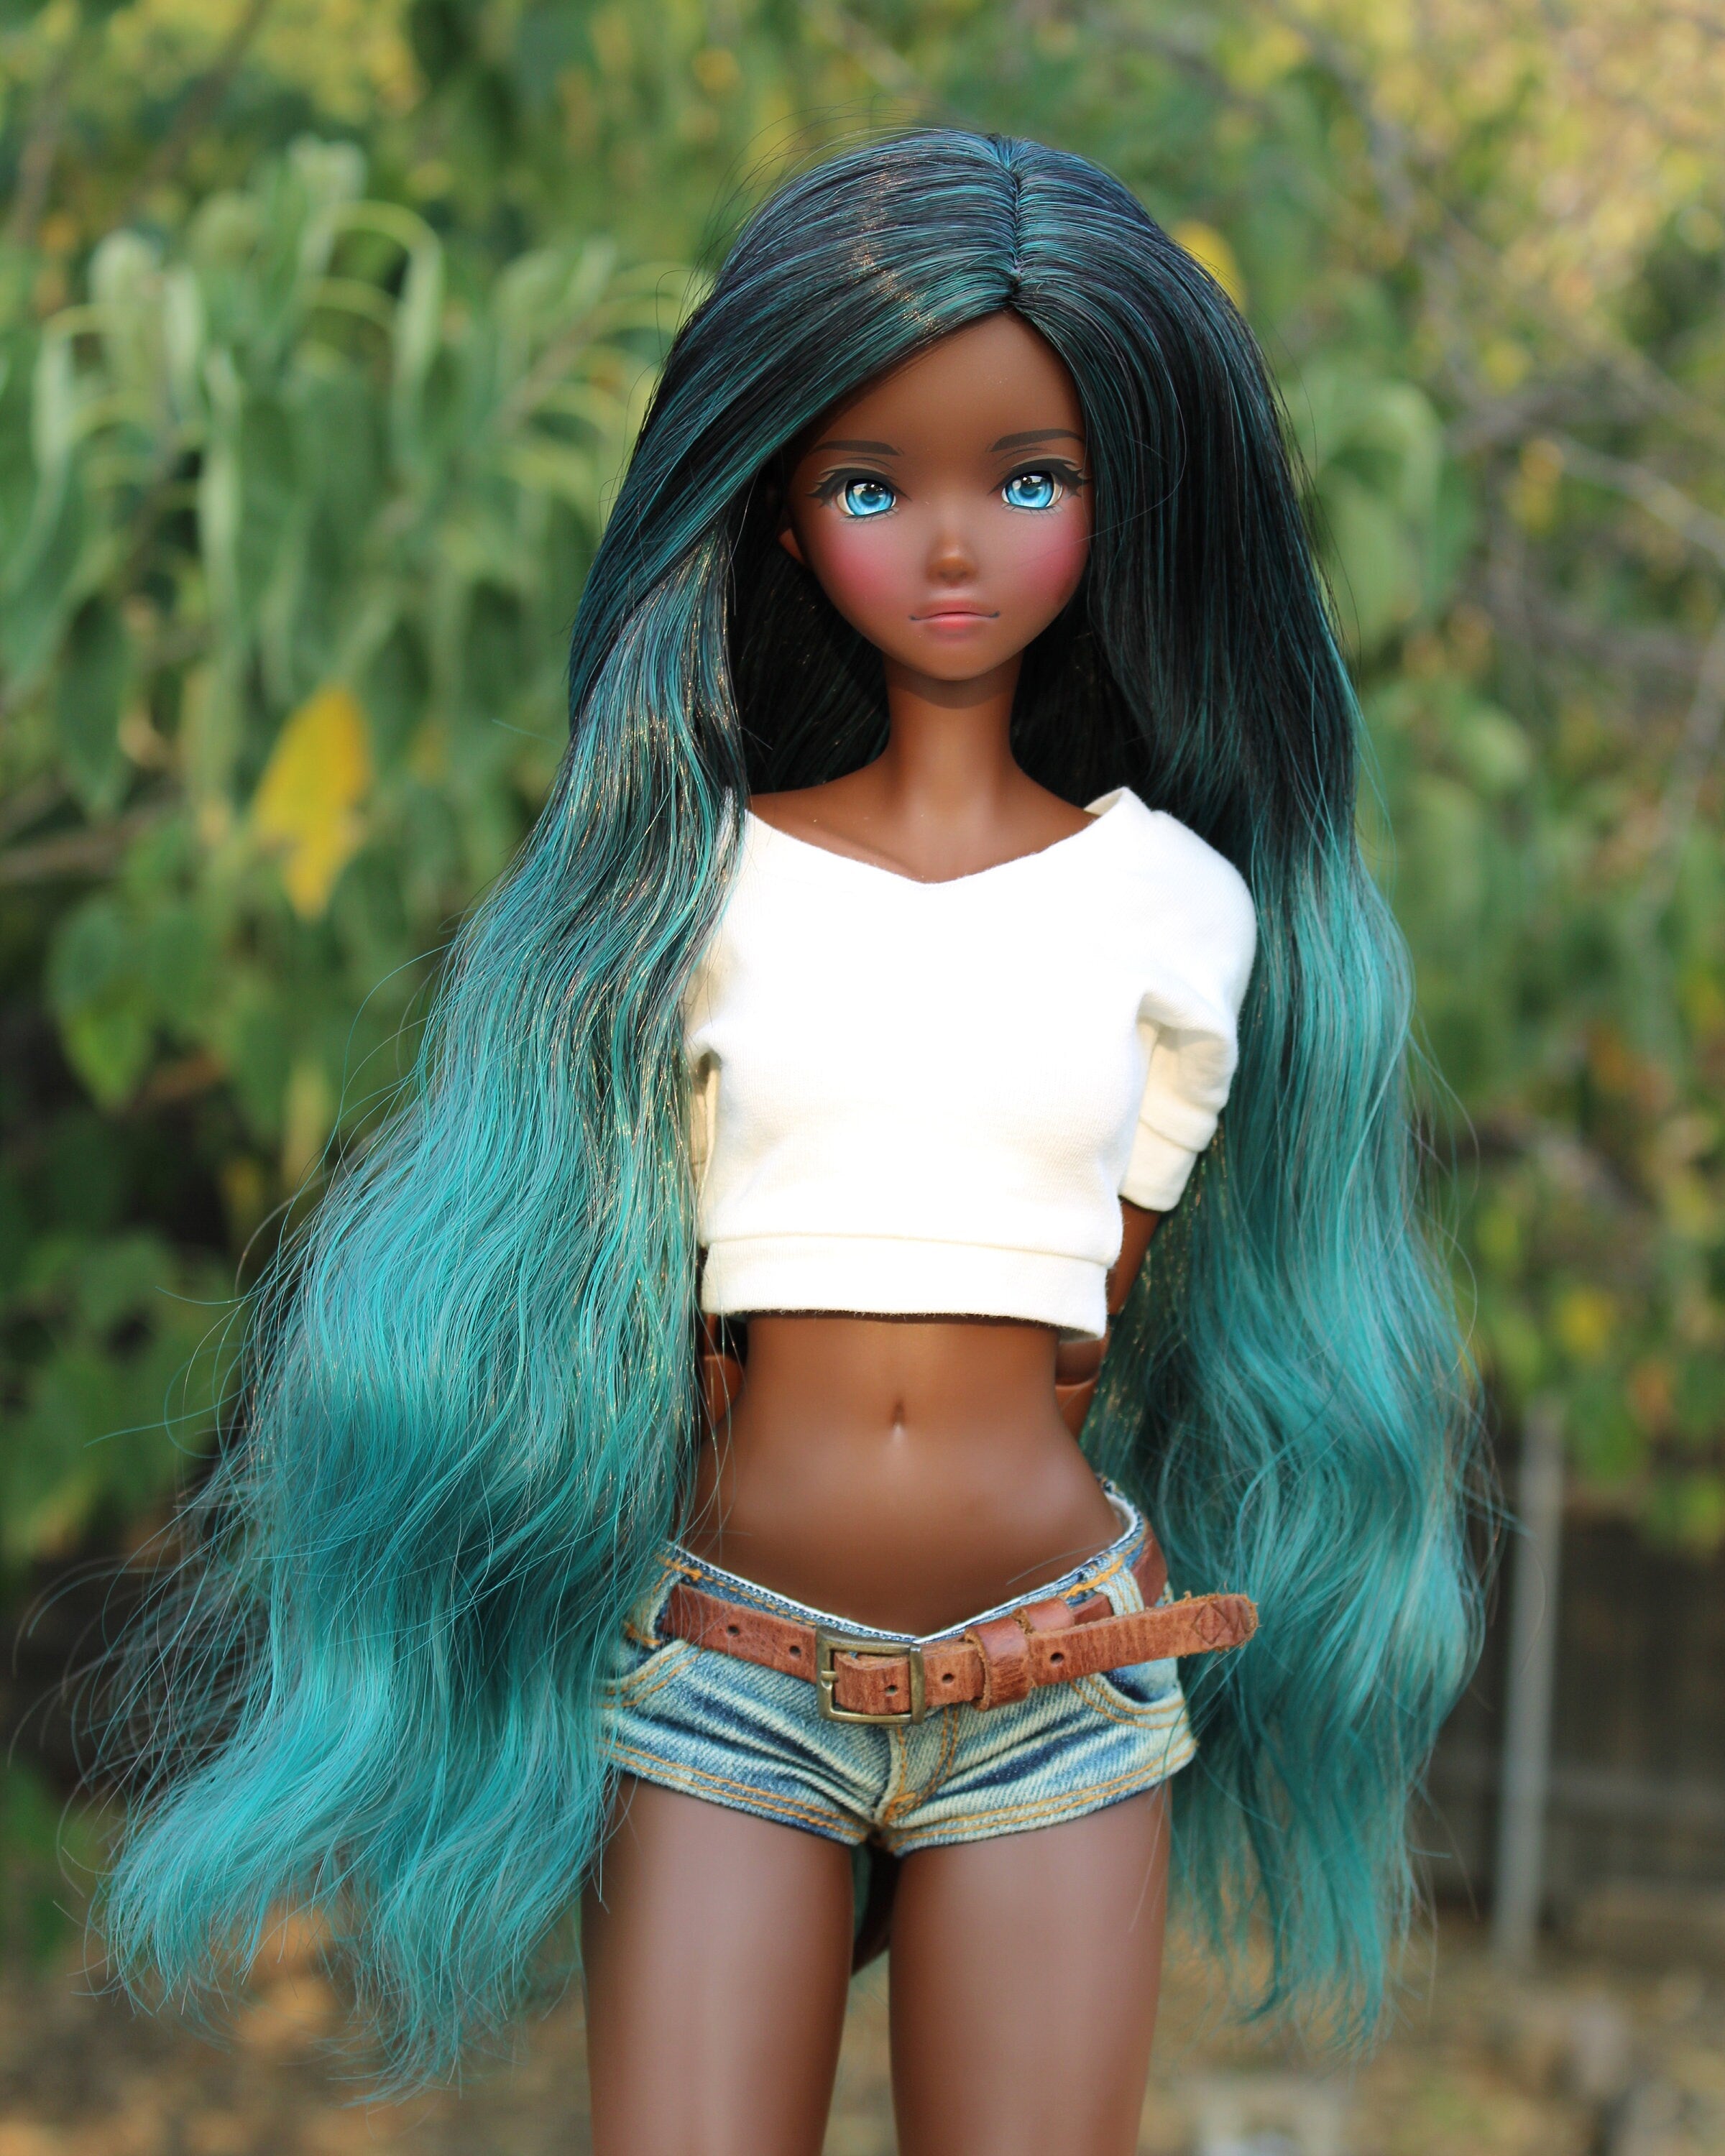 Custom doll Wig for Smart Dolls- Heat Safe - Tangle Resistant- 8.5" head size of Bjd, SD, Dollfie Dream dolls Teal Blues